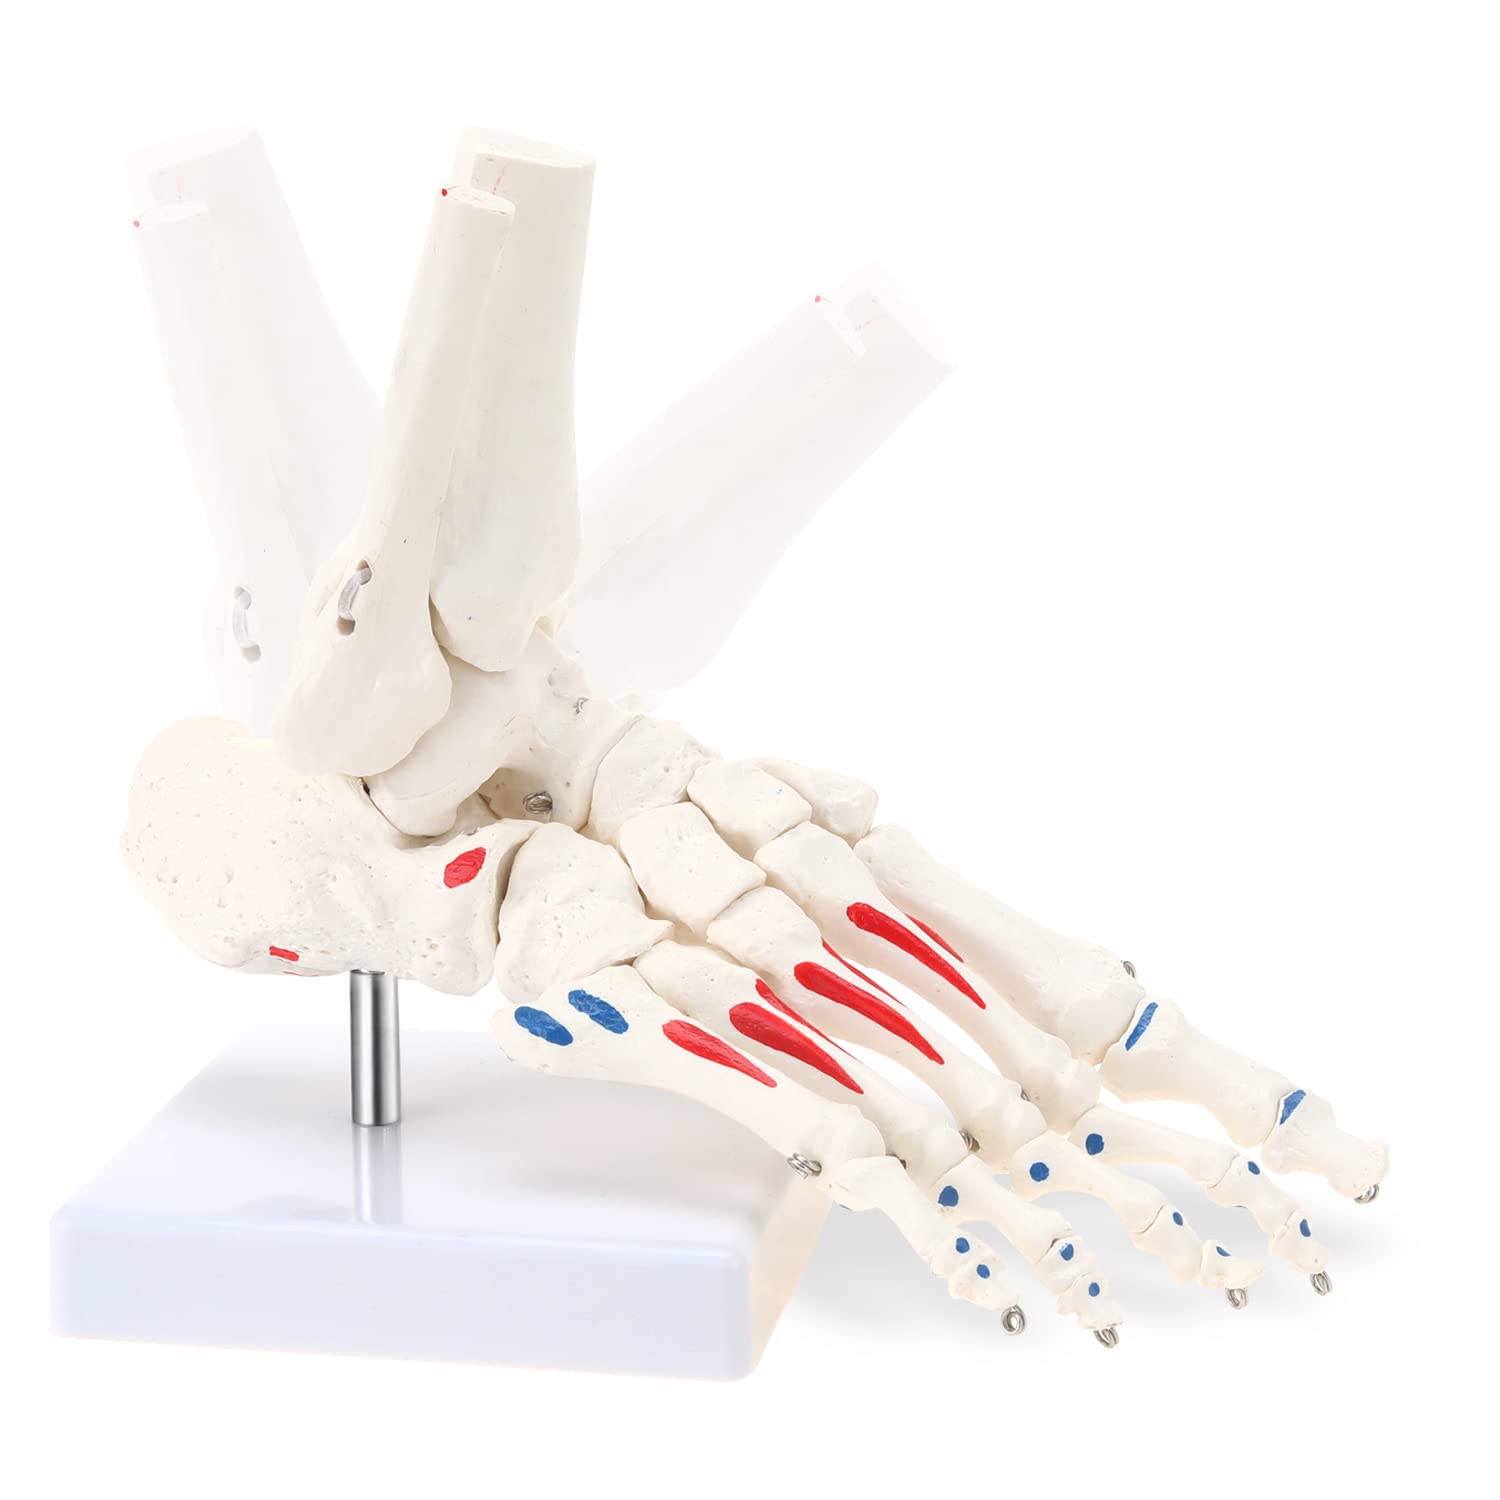 Human skeleton - Hands, Feet, Joints